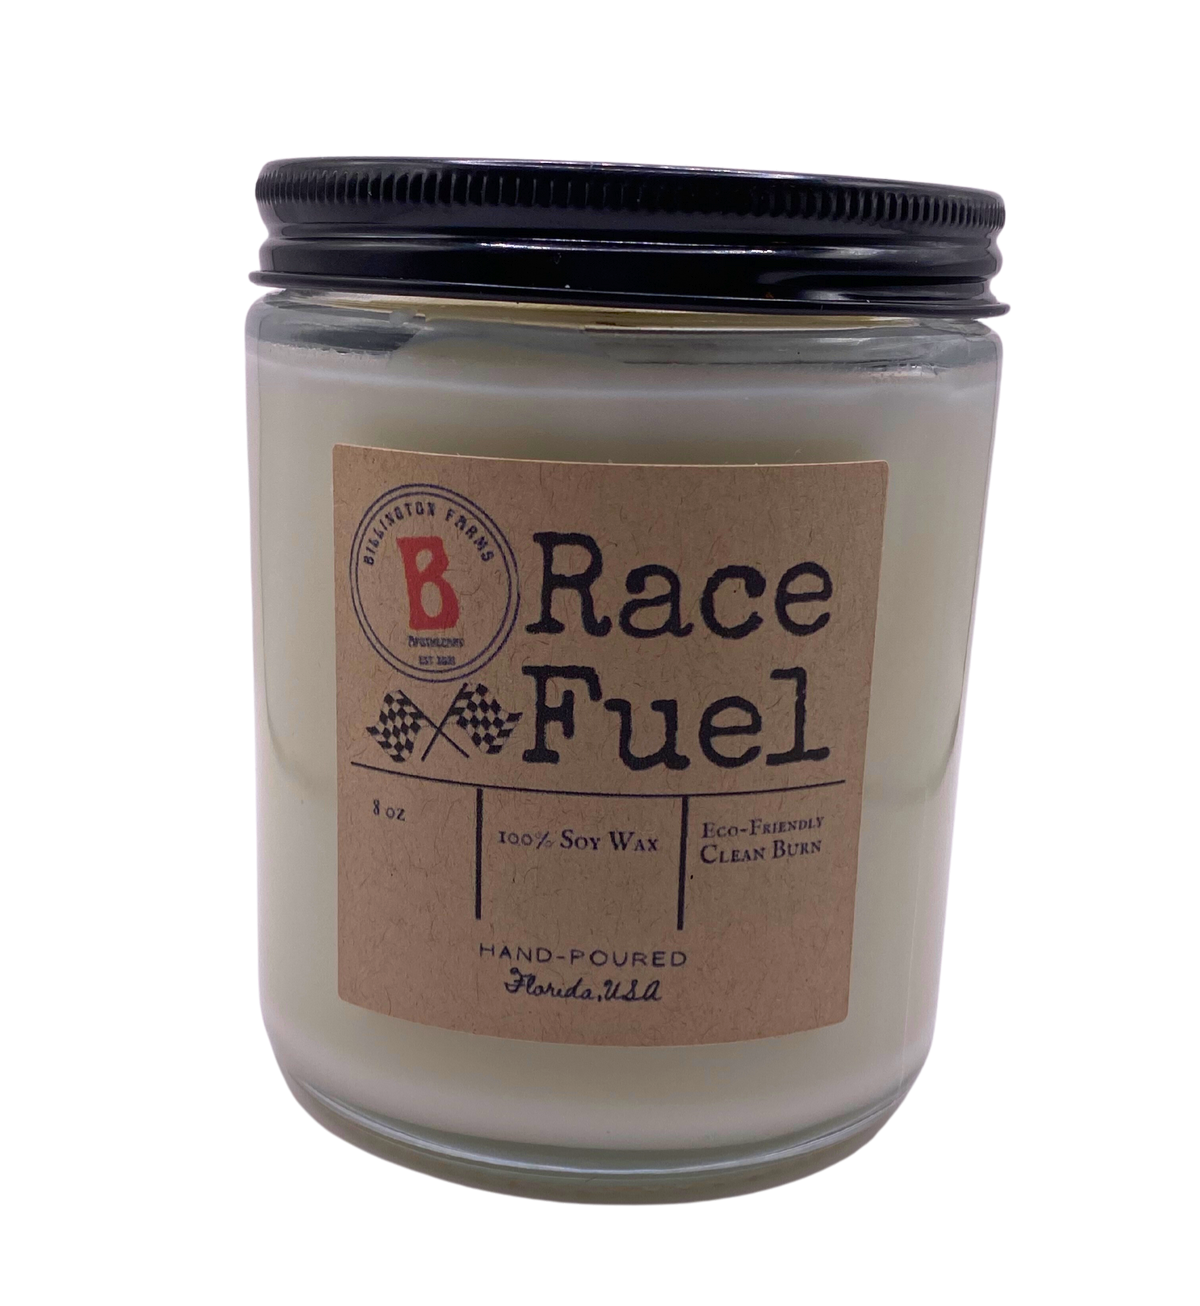 Race Fuel Scented Candle, Race Car Gift, Scented Race Fuel Candle –  Billington Farms